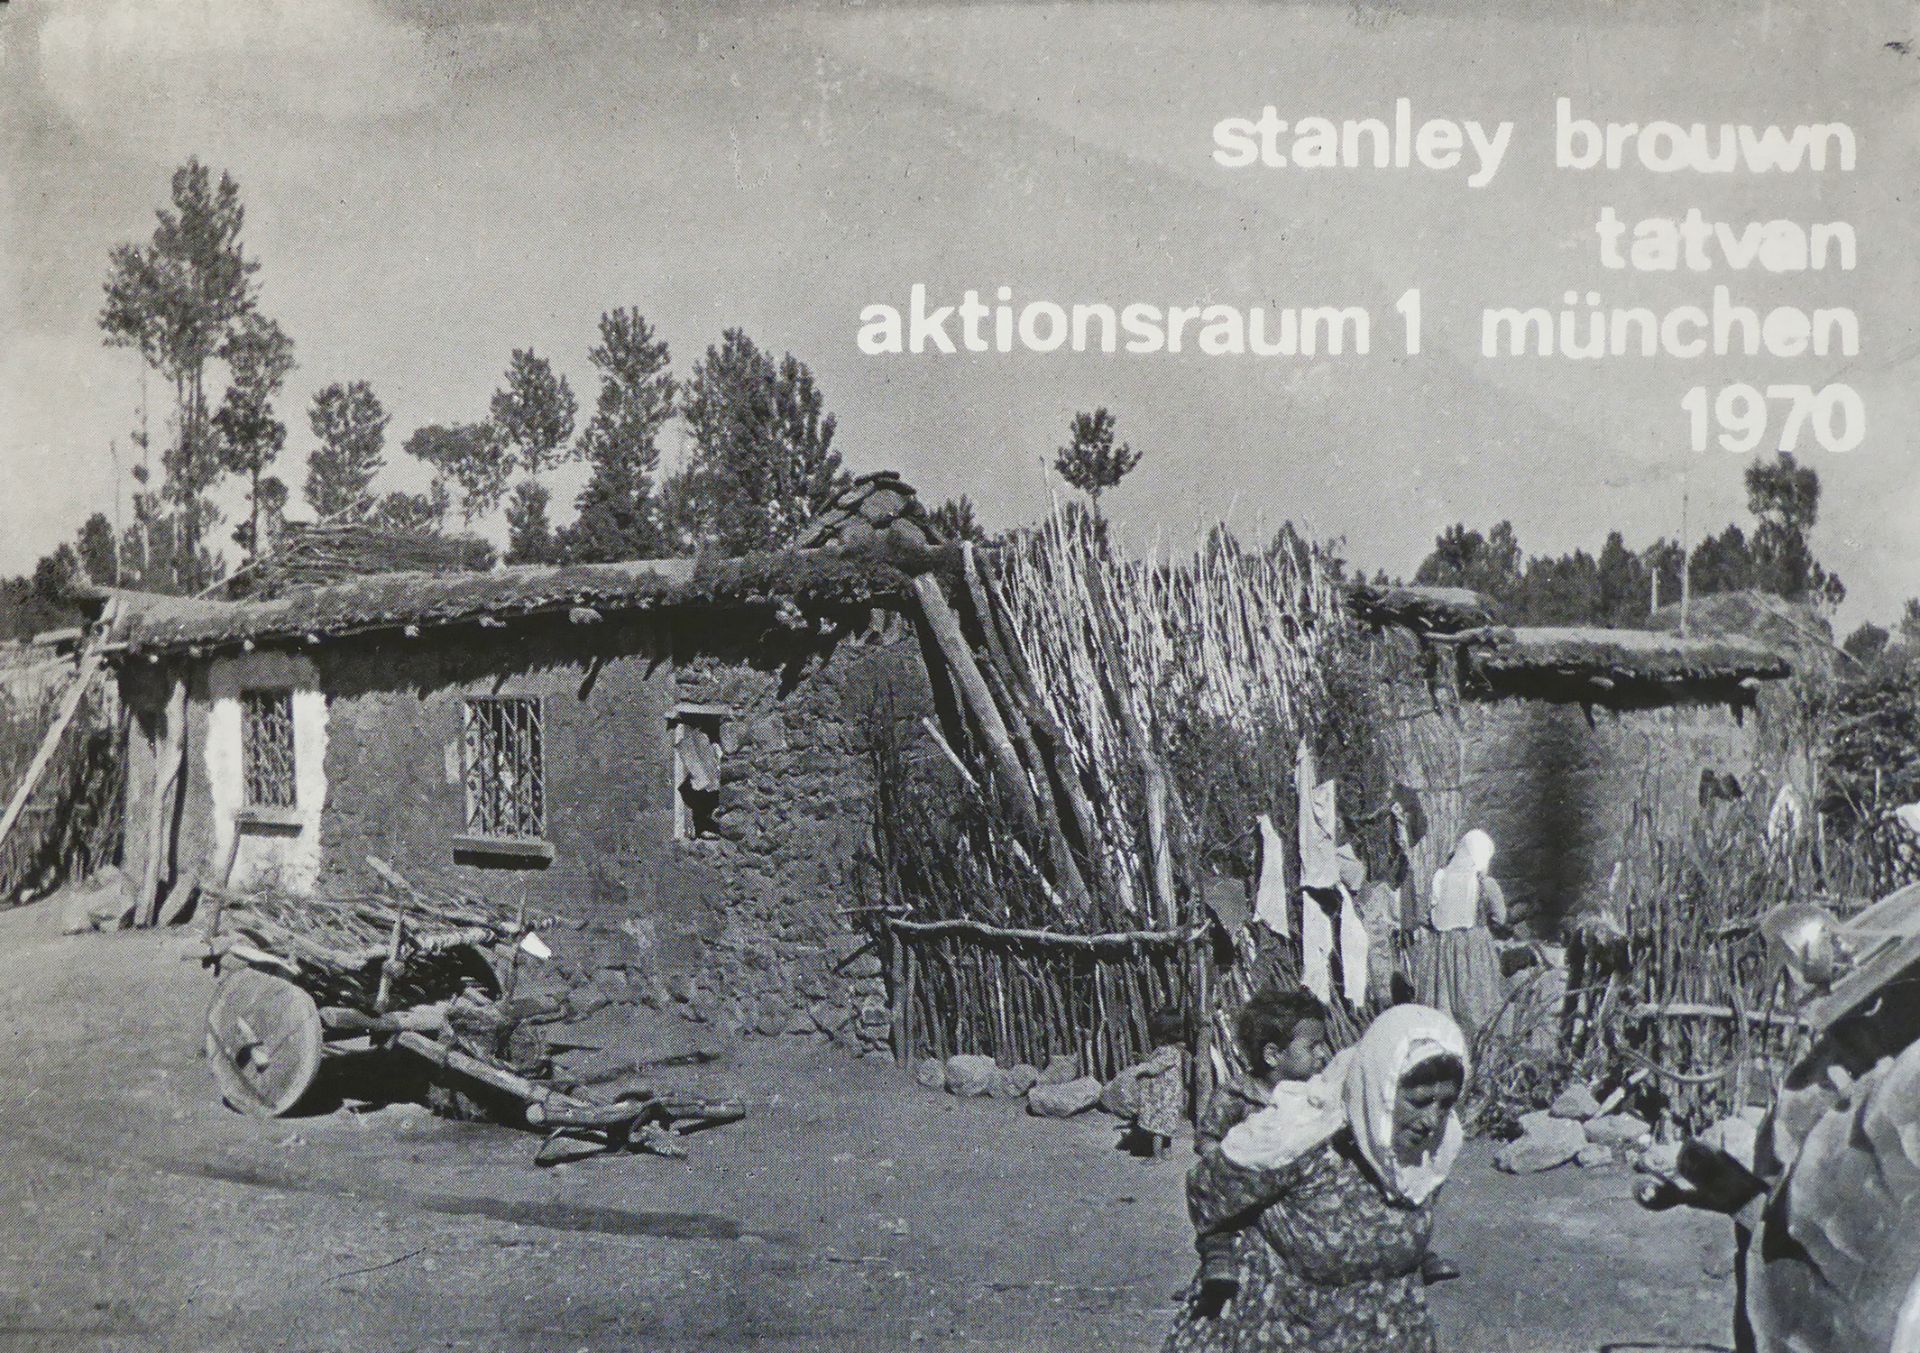 Stanley Brouwn